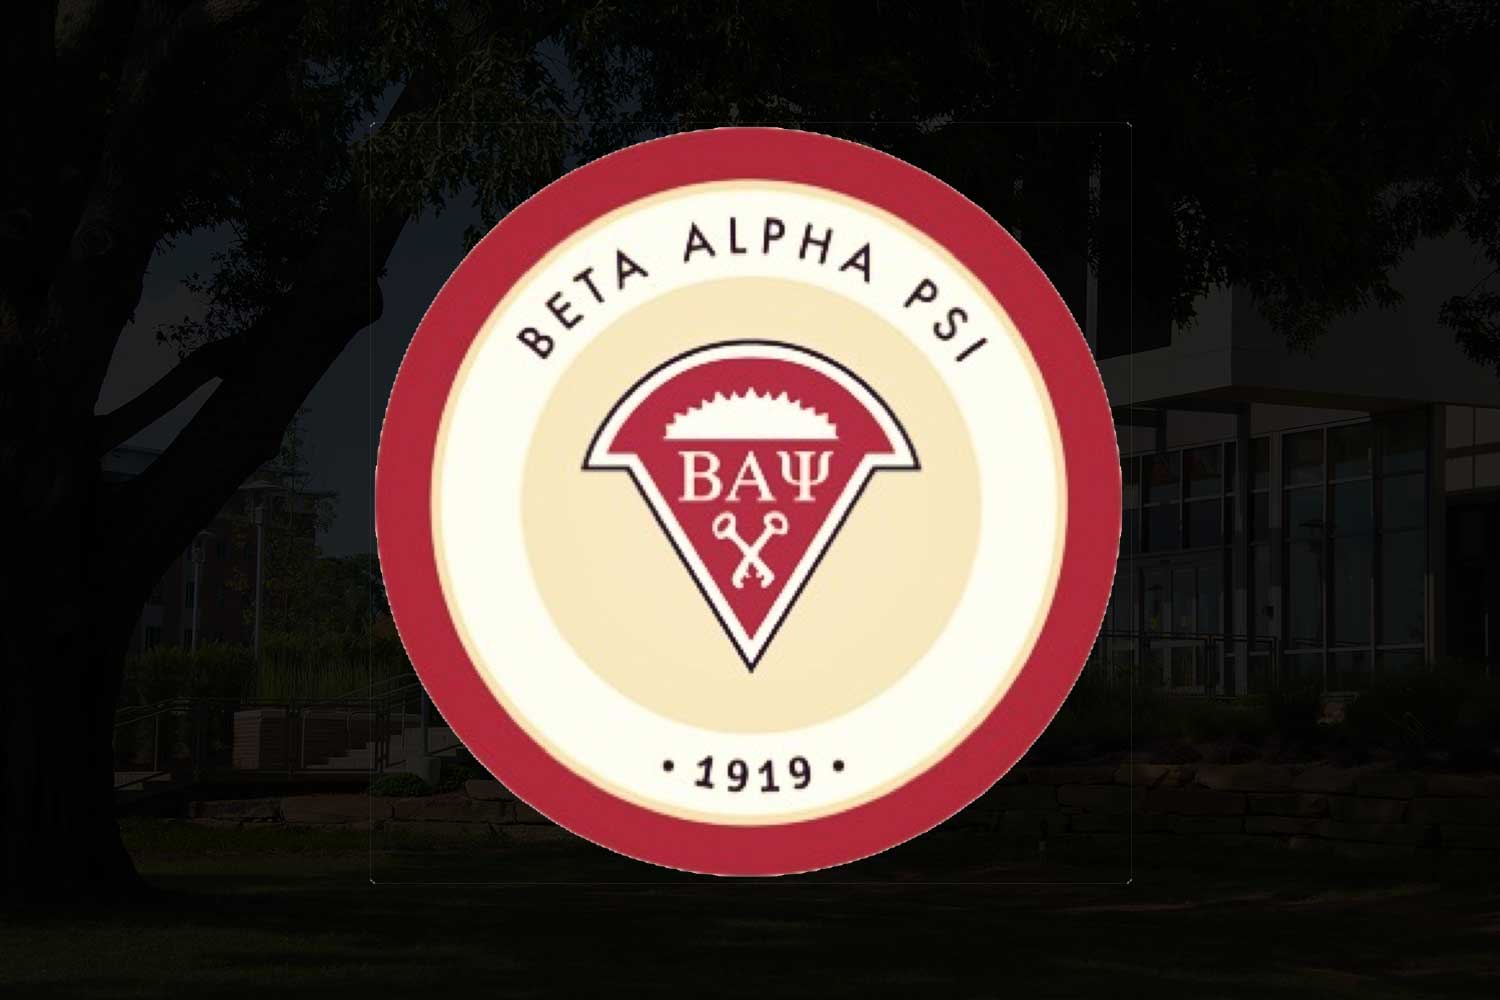 beta alpha psi logo